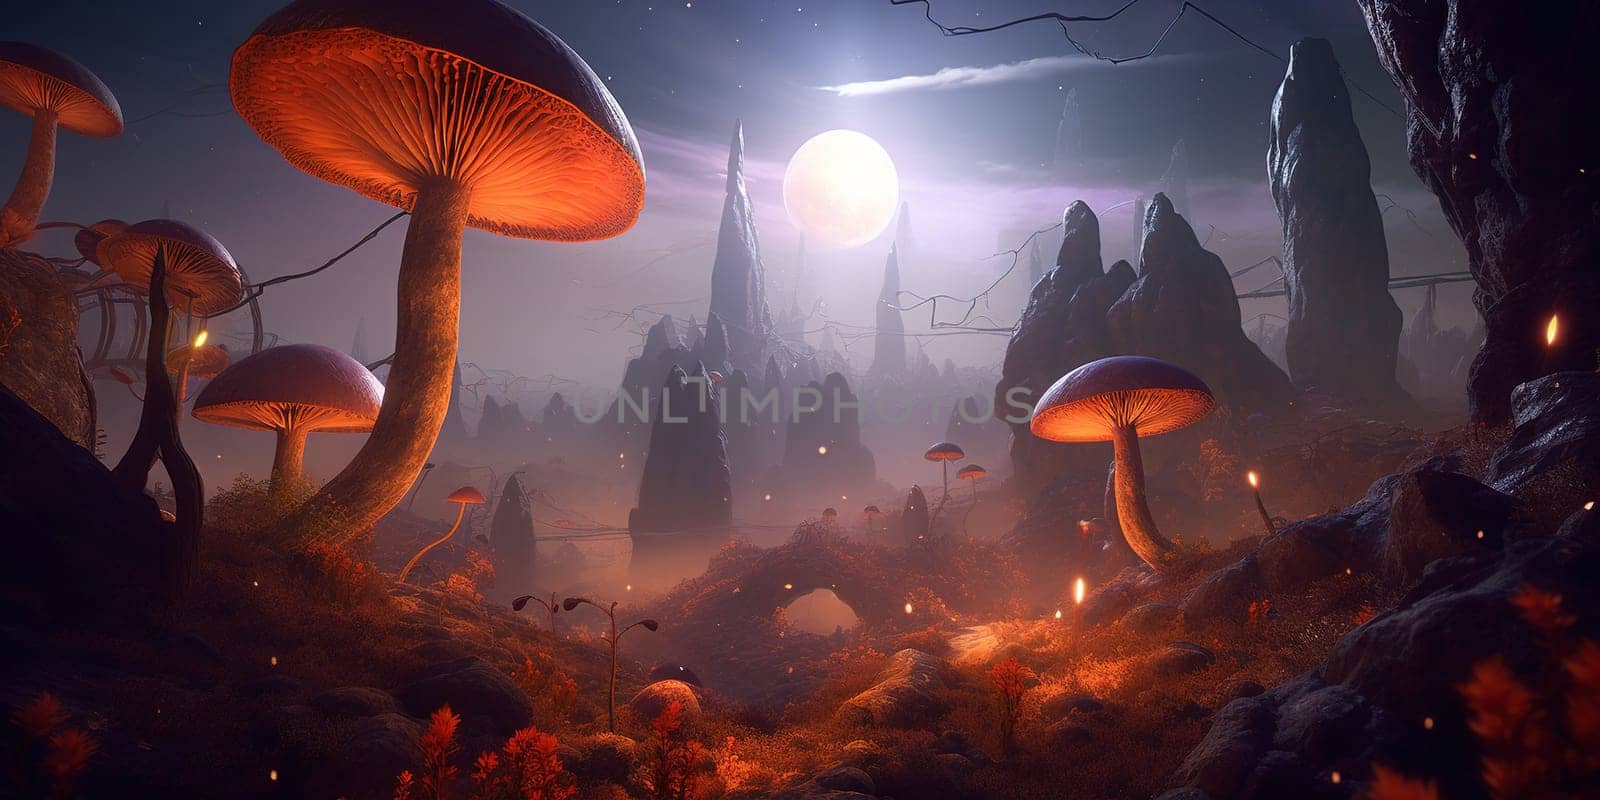 Illustration Fabulous Magic Mushrooms Lighting At Night Against Mountains by GekaSkr